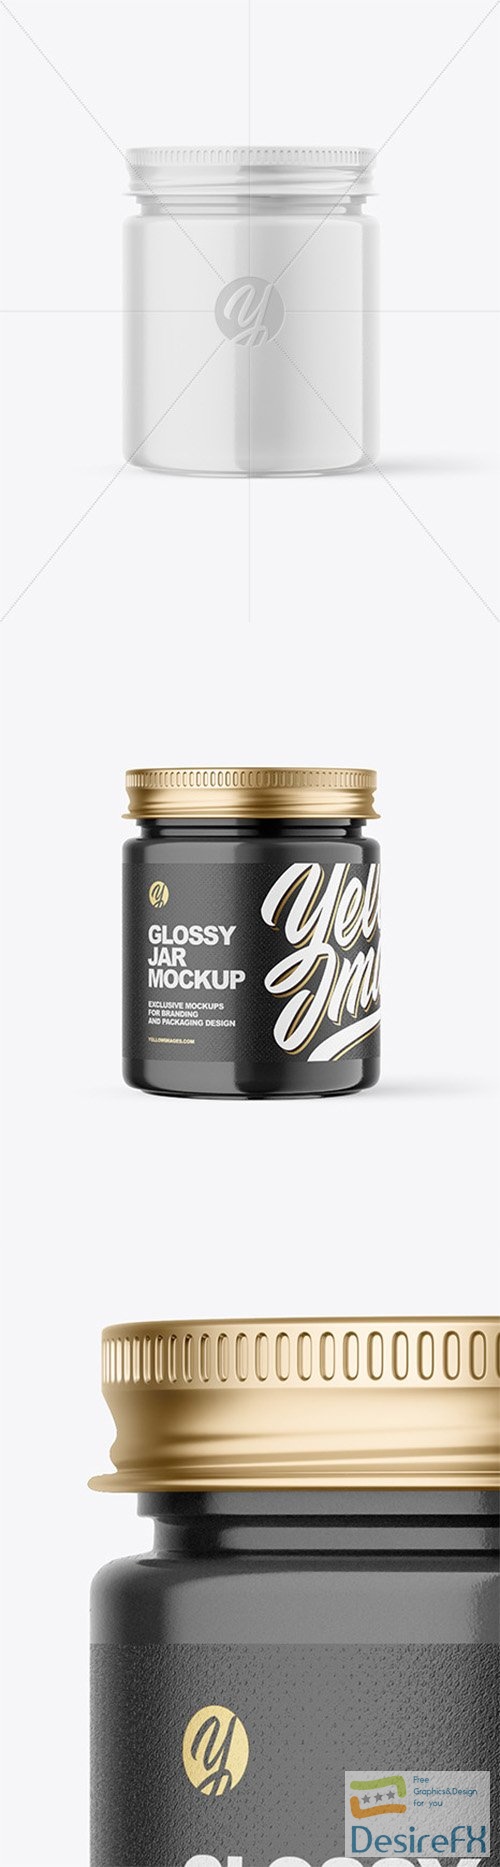 Glossy Cosmetic Jar with Metallic Cap Mockup 80013 TIF